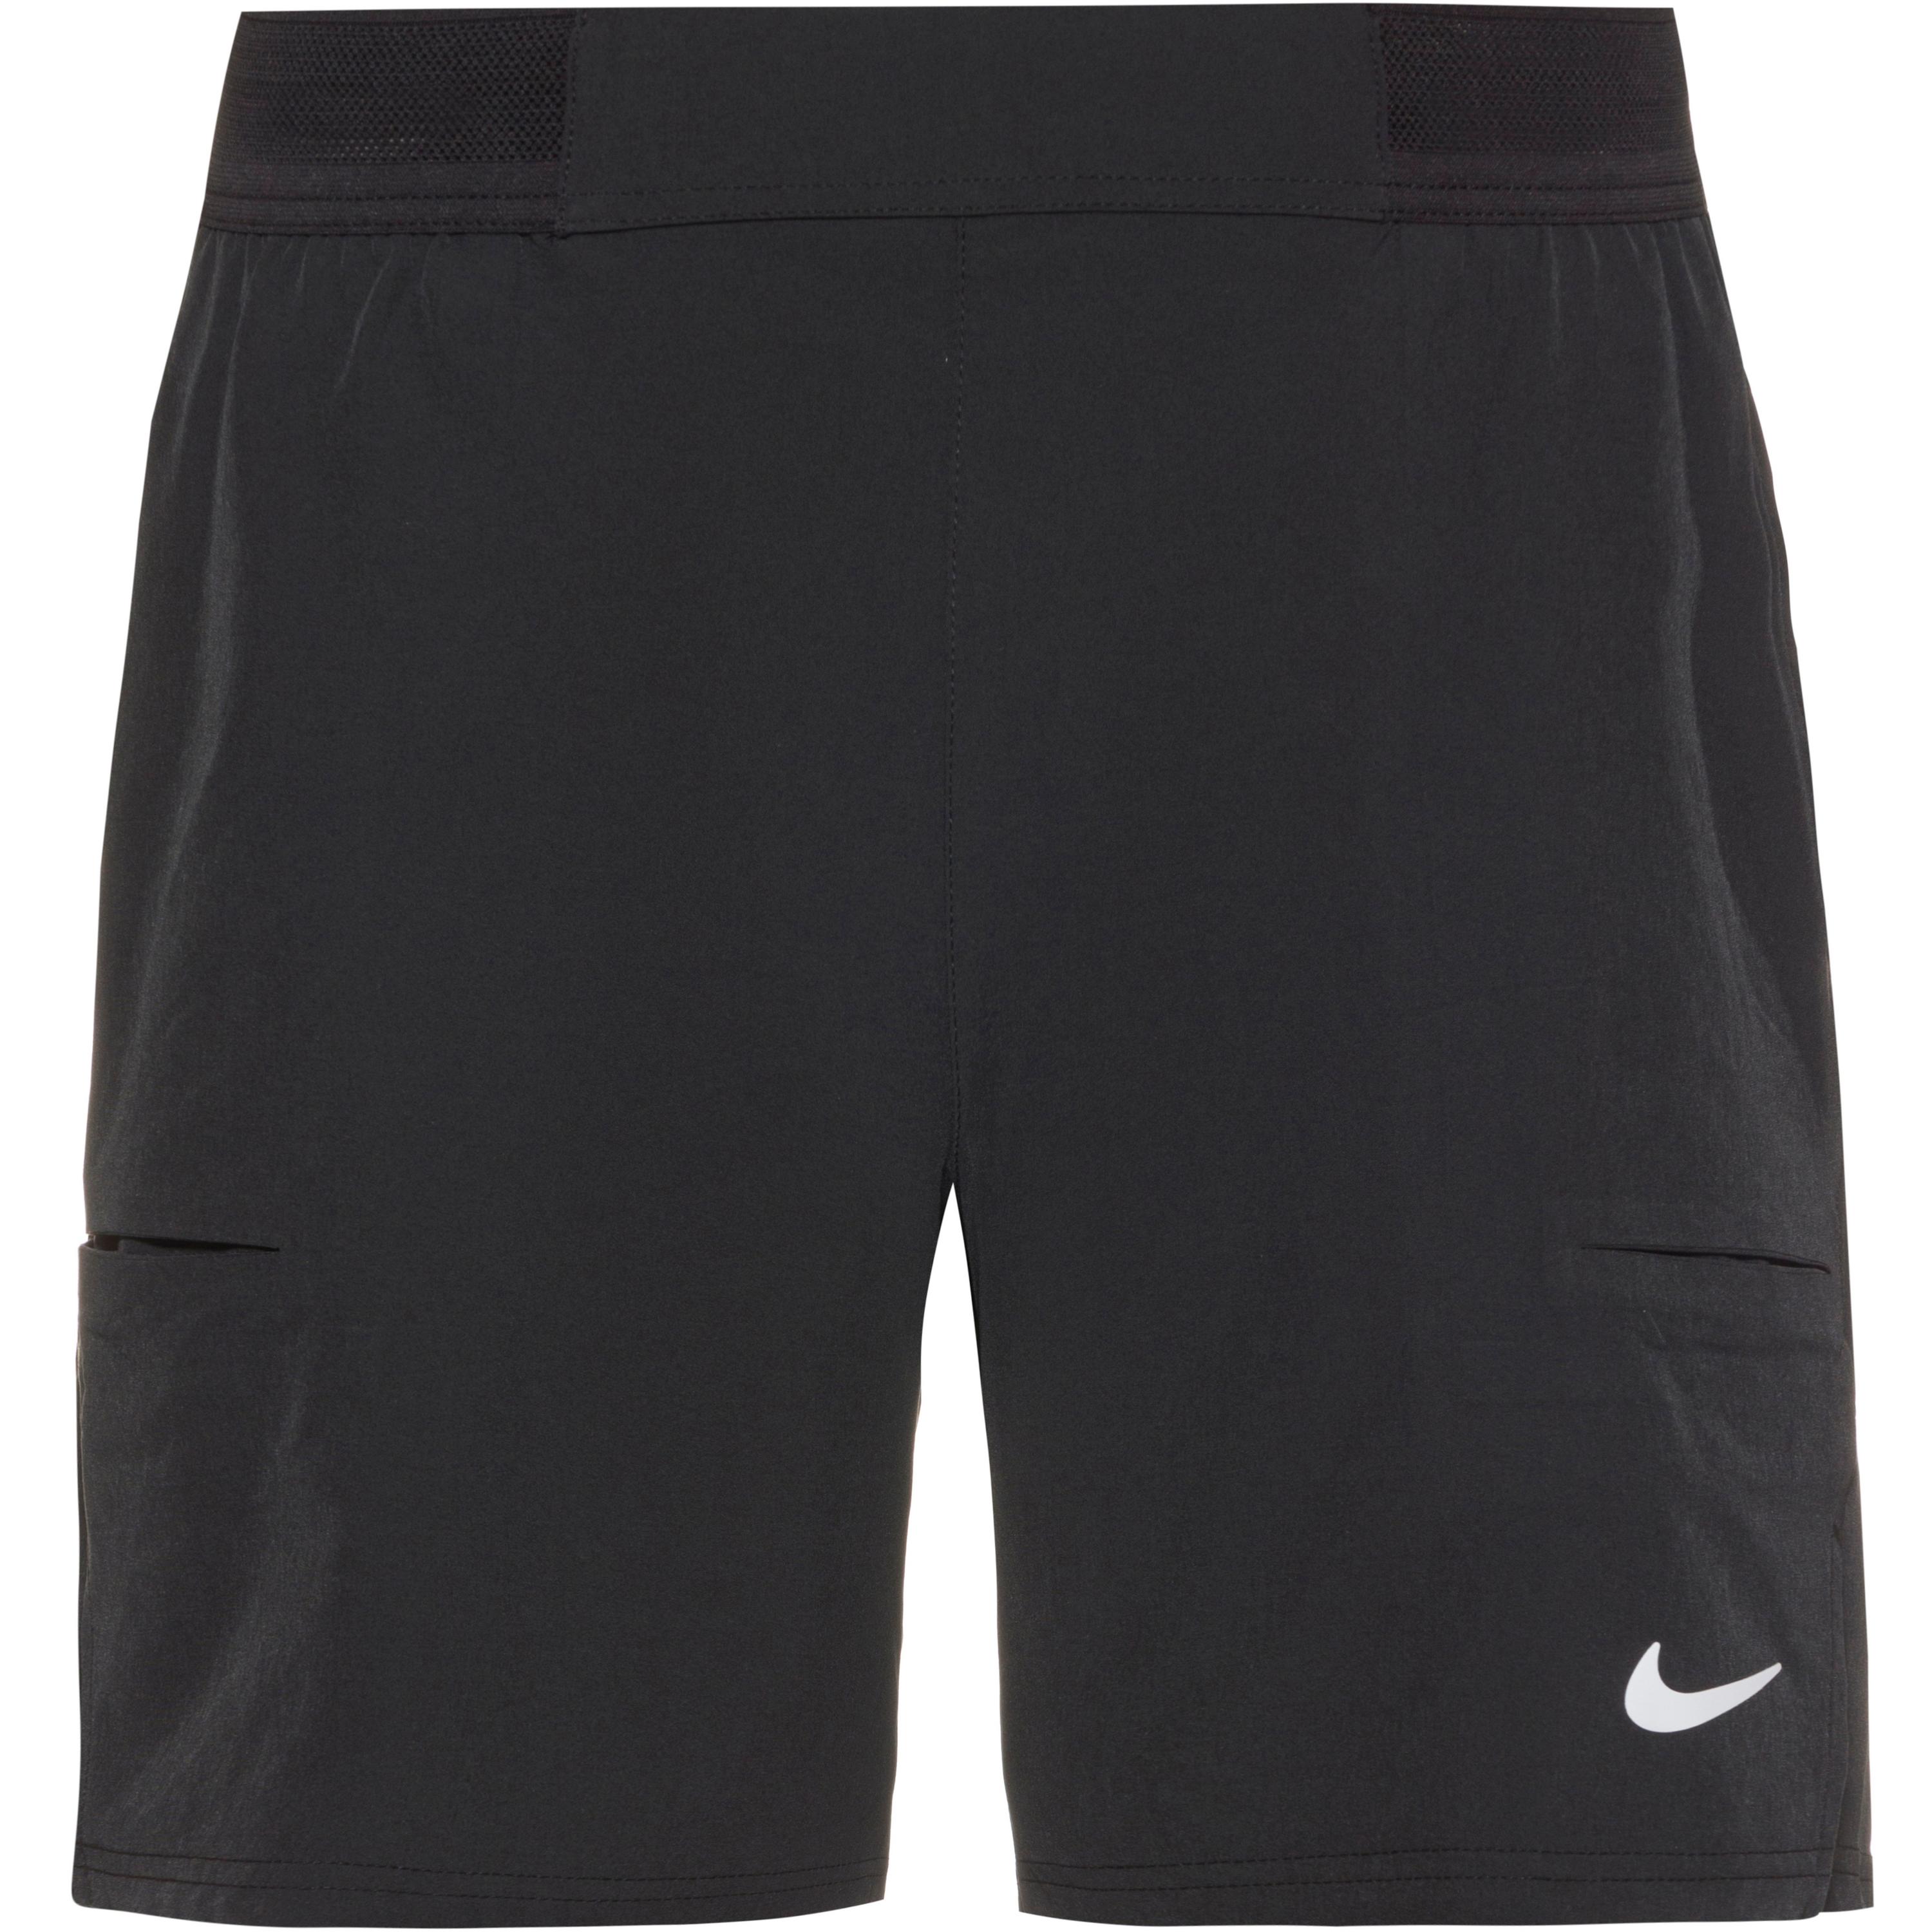 Image of Nike Court Advantage 7IN Tennisshorts Herren